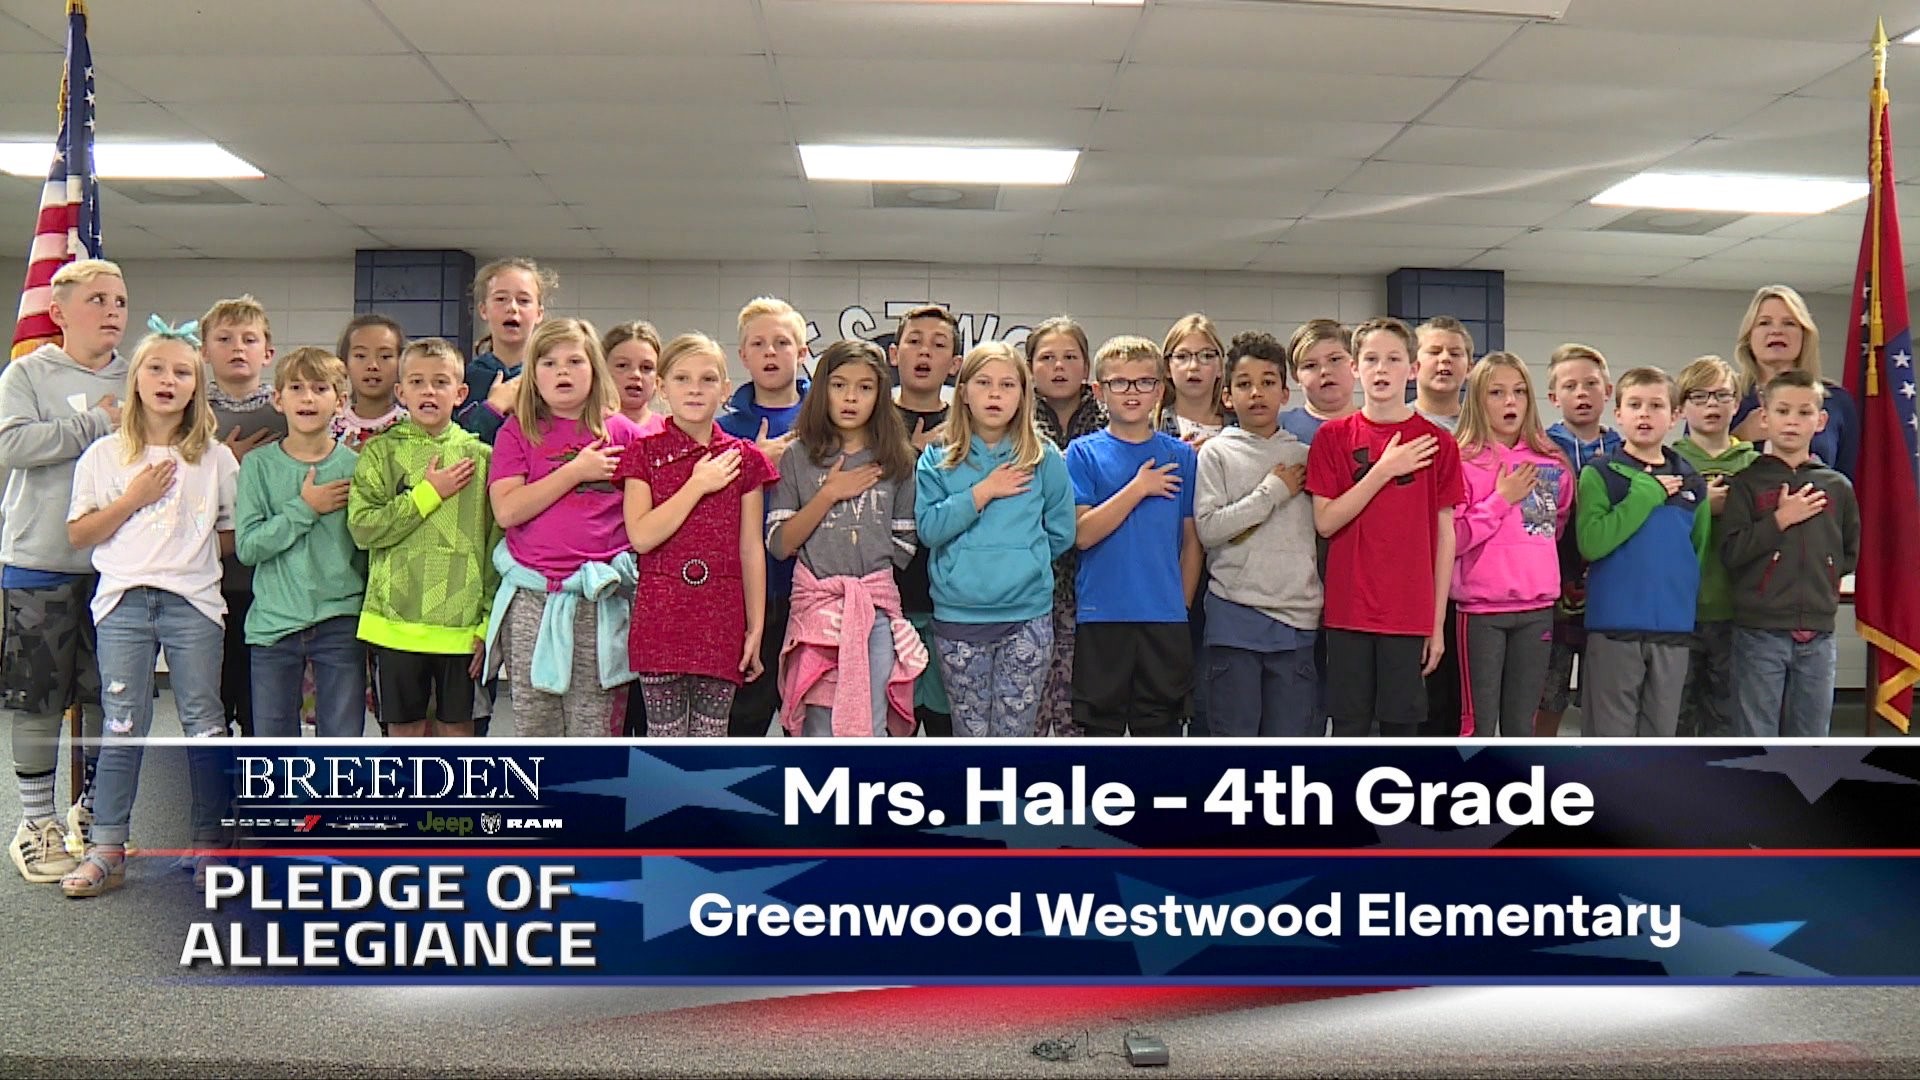 Mrs. Hale 4th Grade Greenwood Westwood Elementary